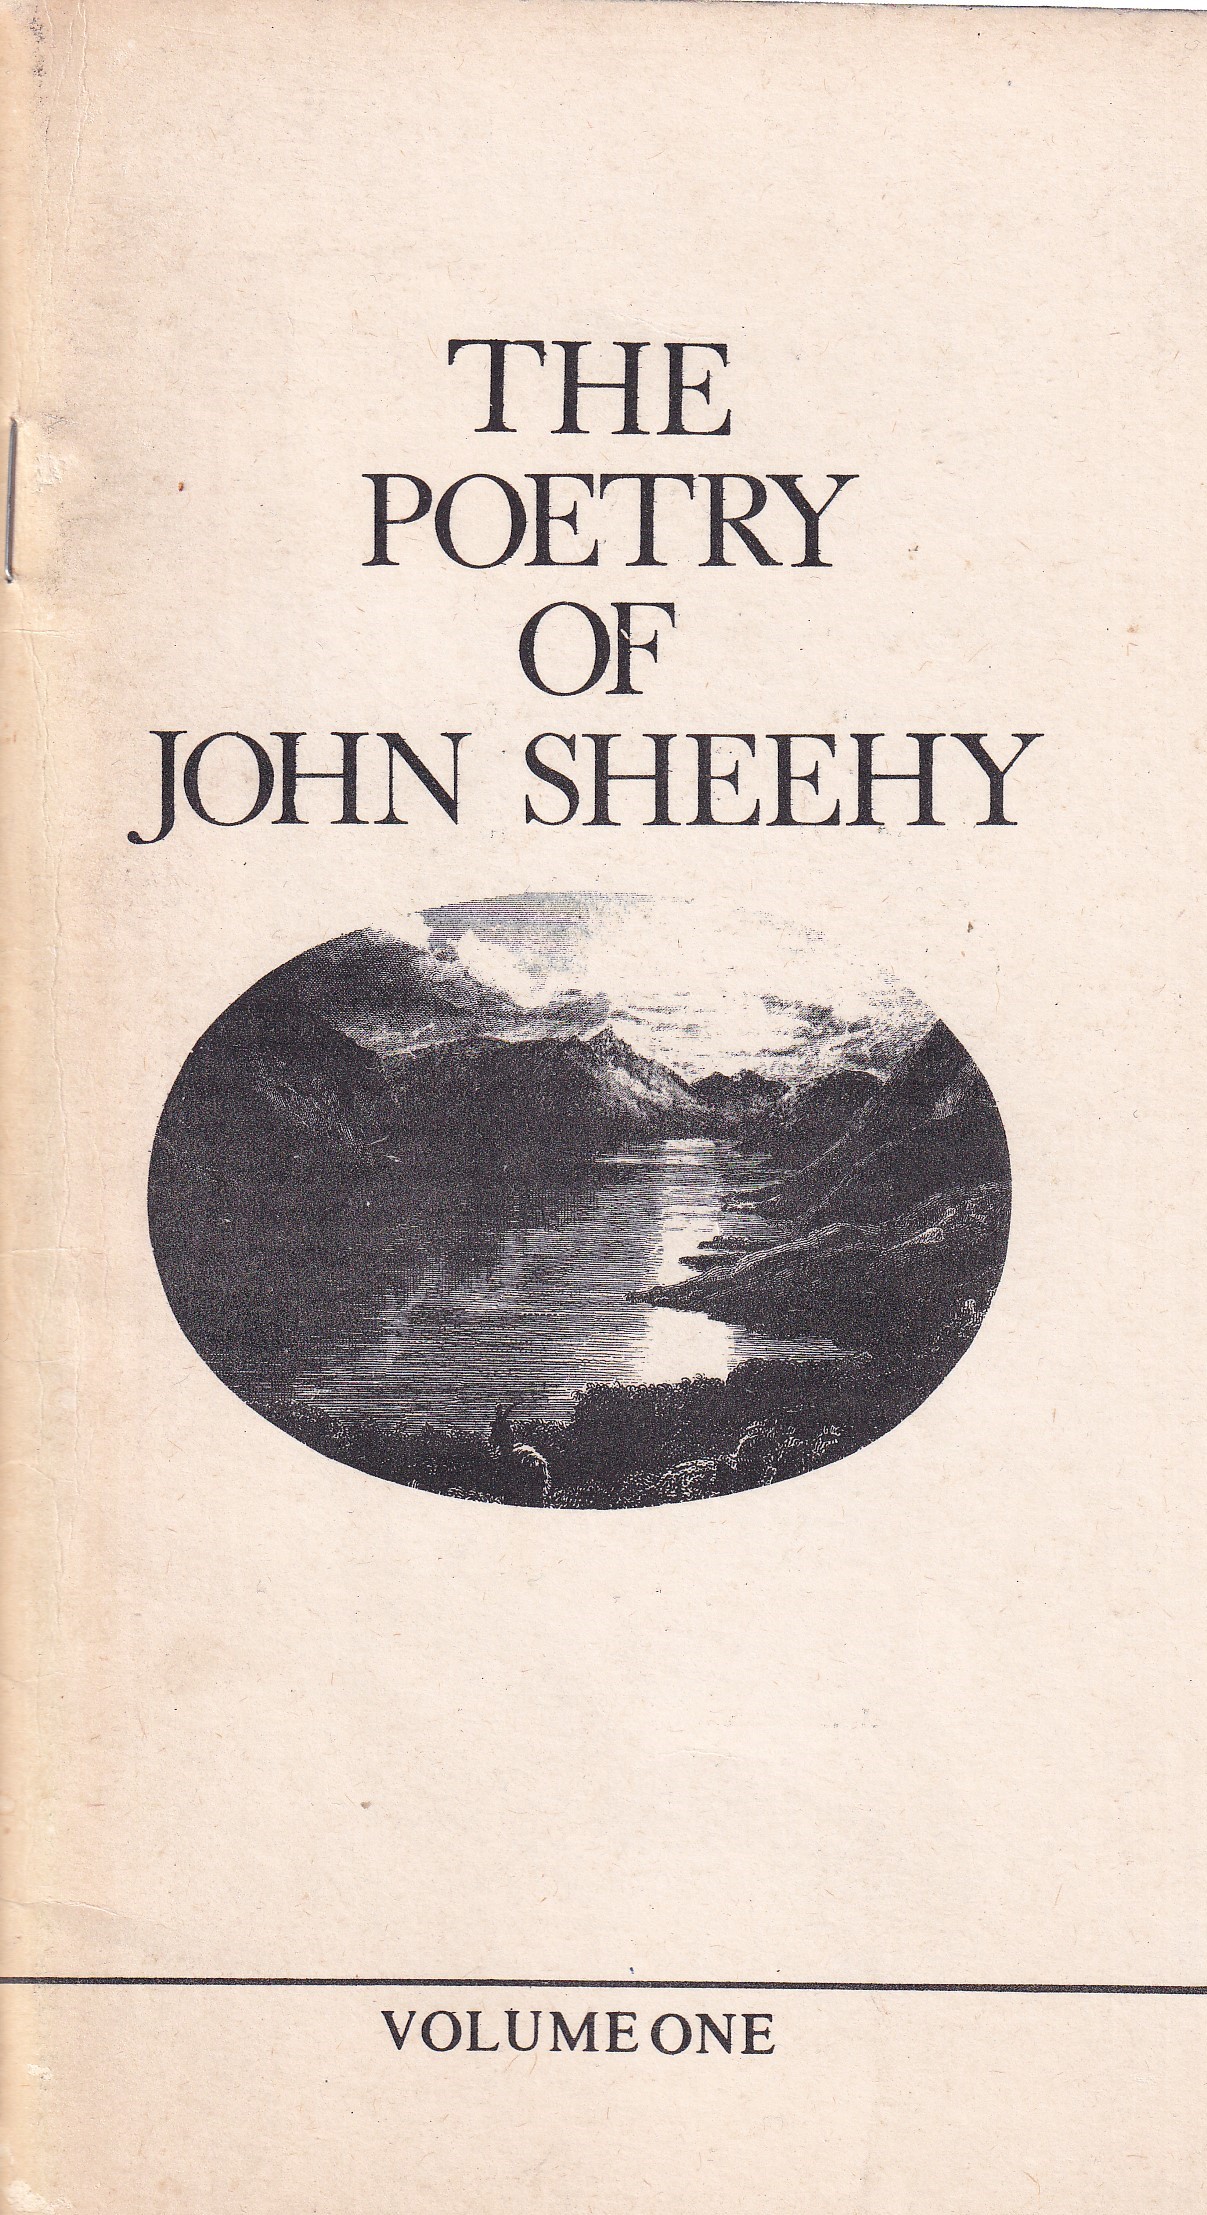 The Poetry of John Sheehy Vol l by John Sheehy